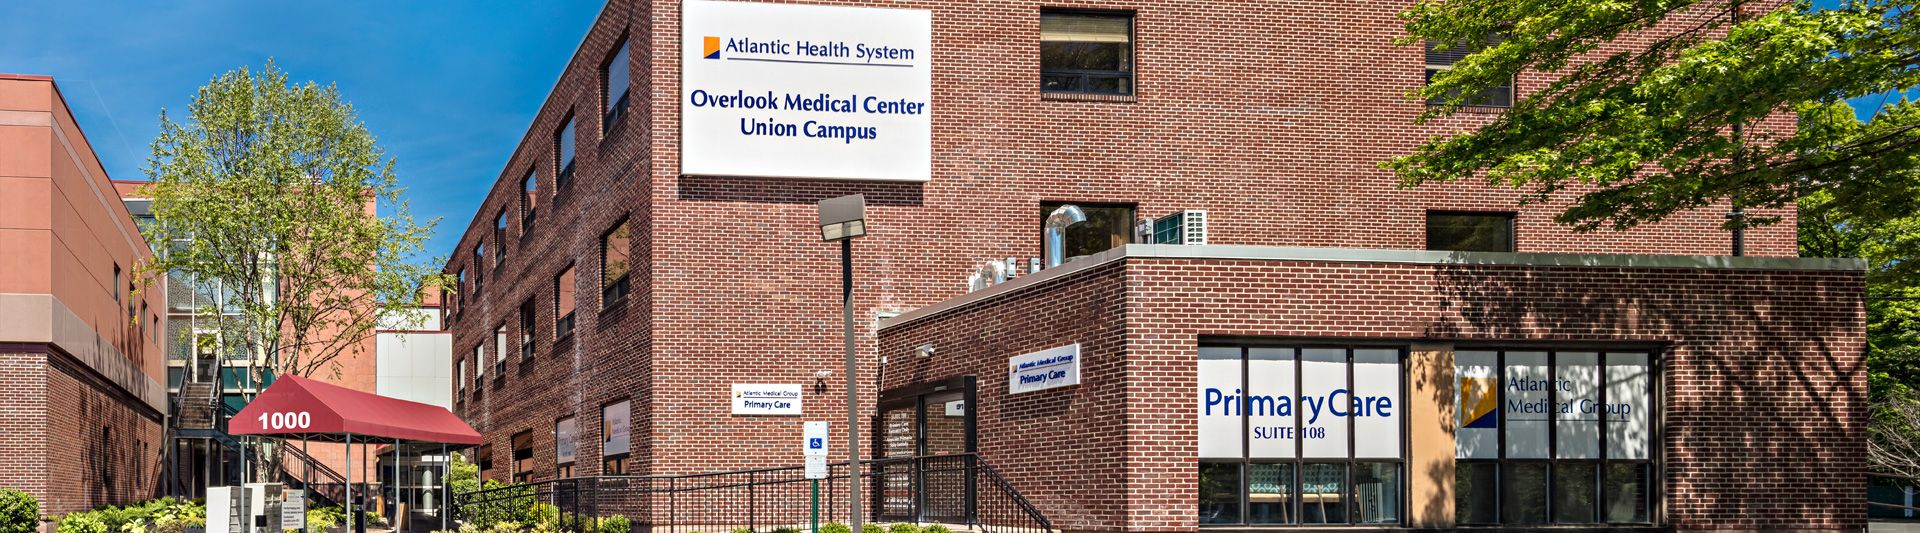 Overlook Medical Center - Union Campus